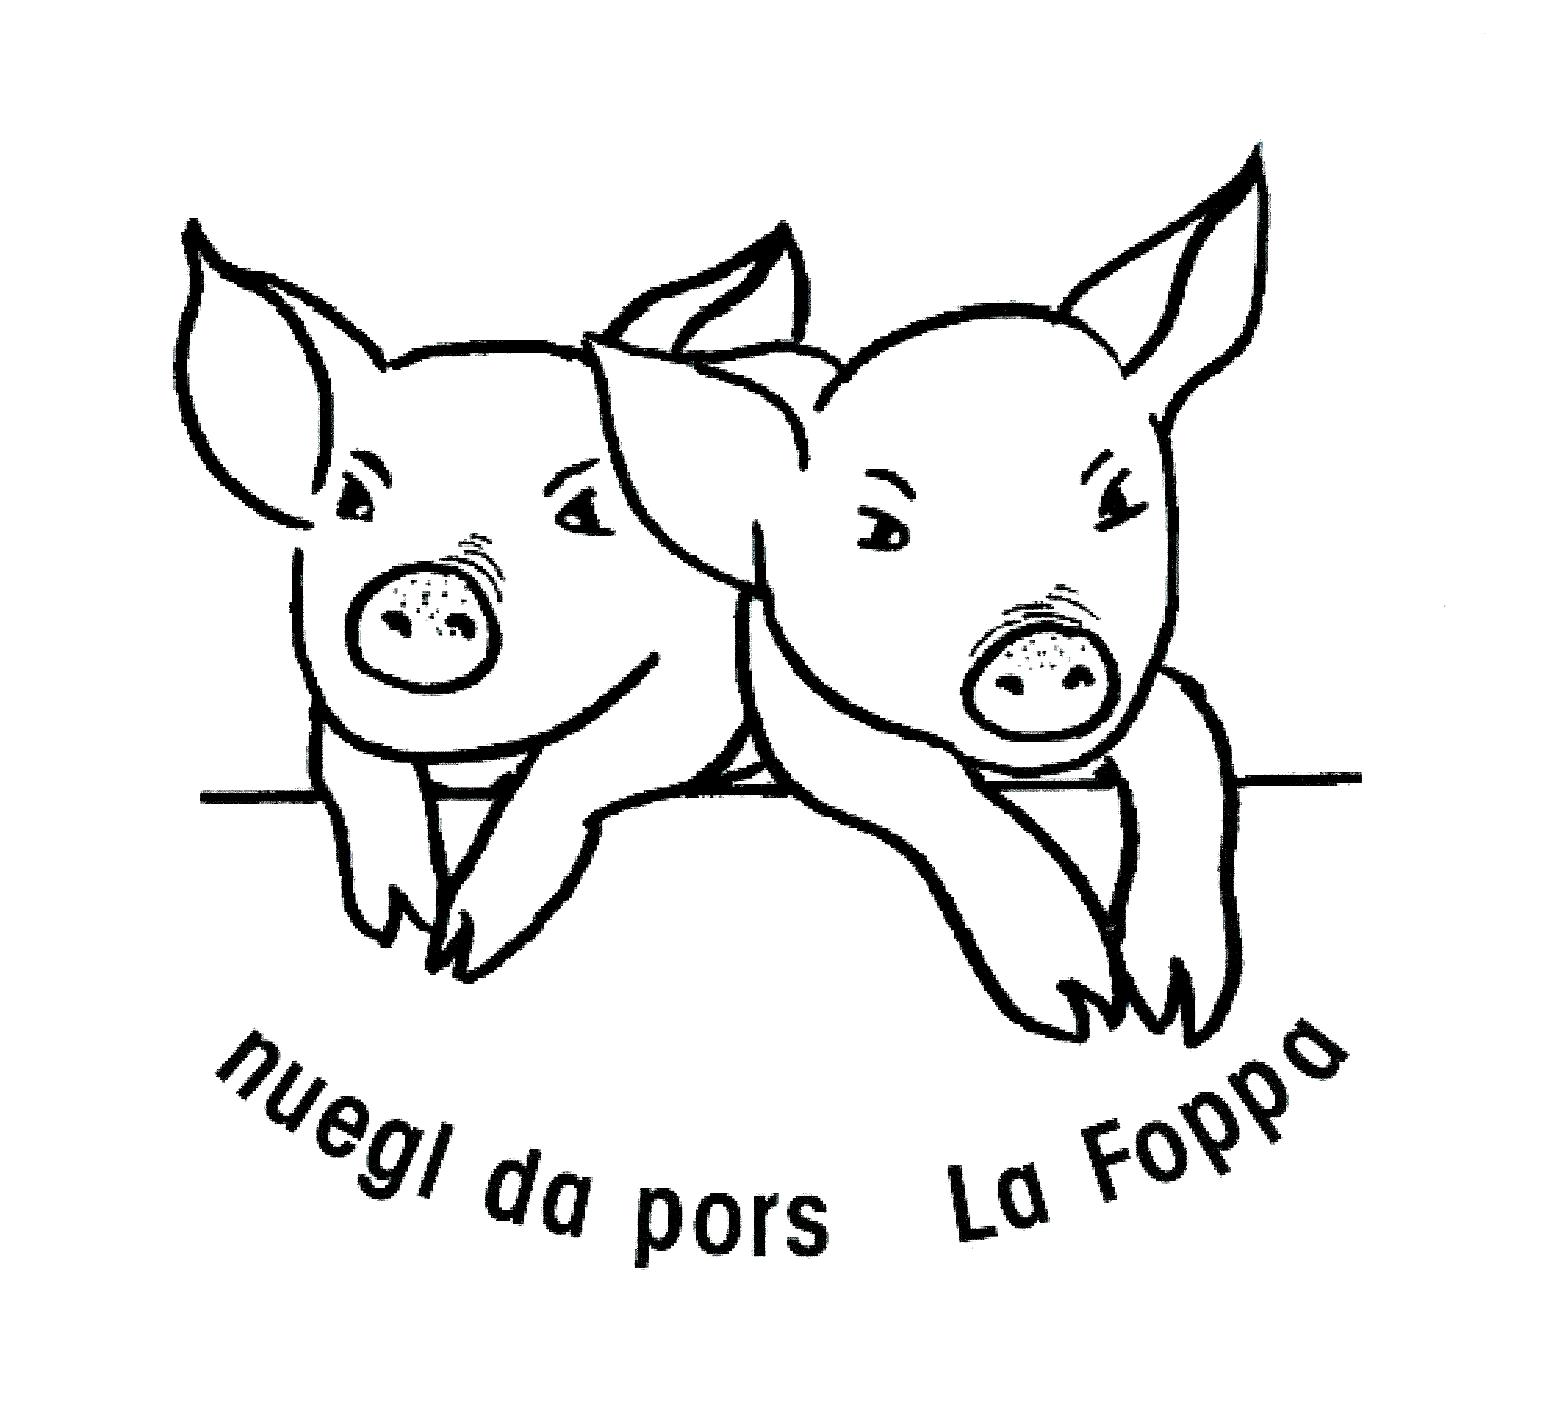 Nuegl da pors / Schweinestall La Foppa